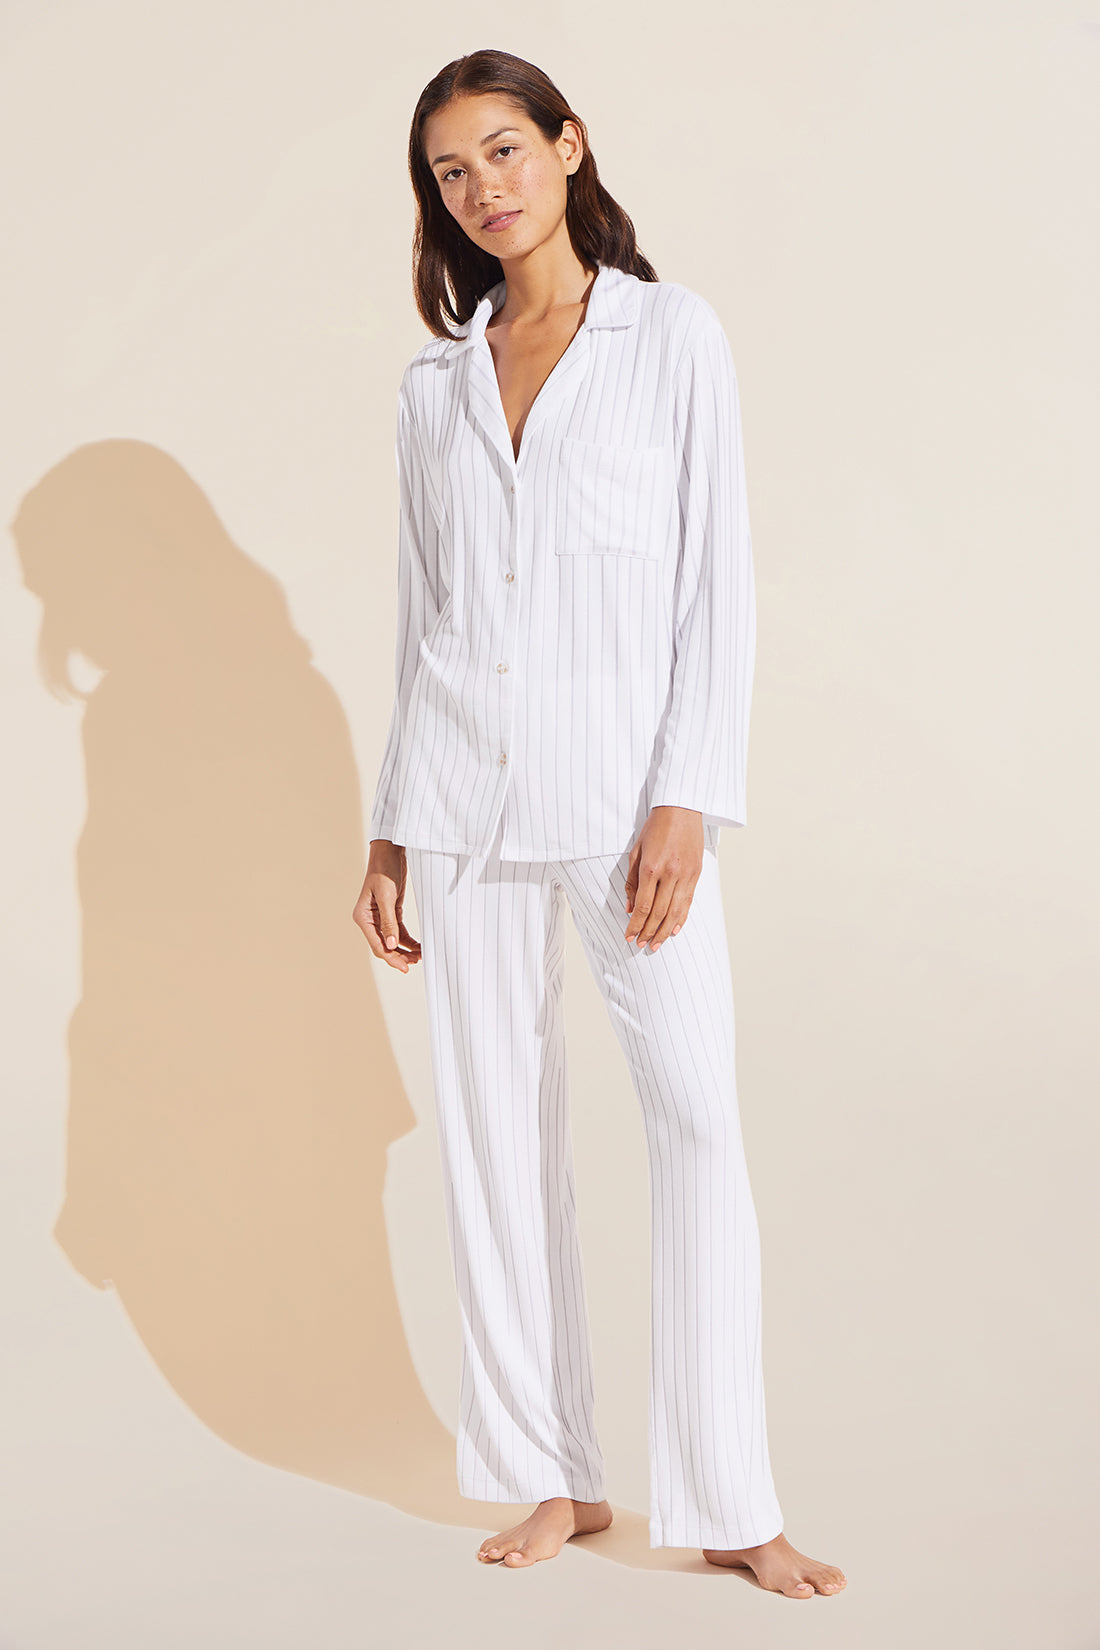 TENCEL™ Modal - Pajamas, PJ Sets, Sleepshirts - Eberjey